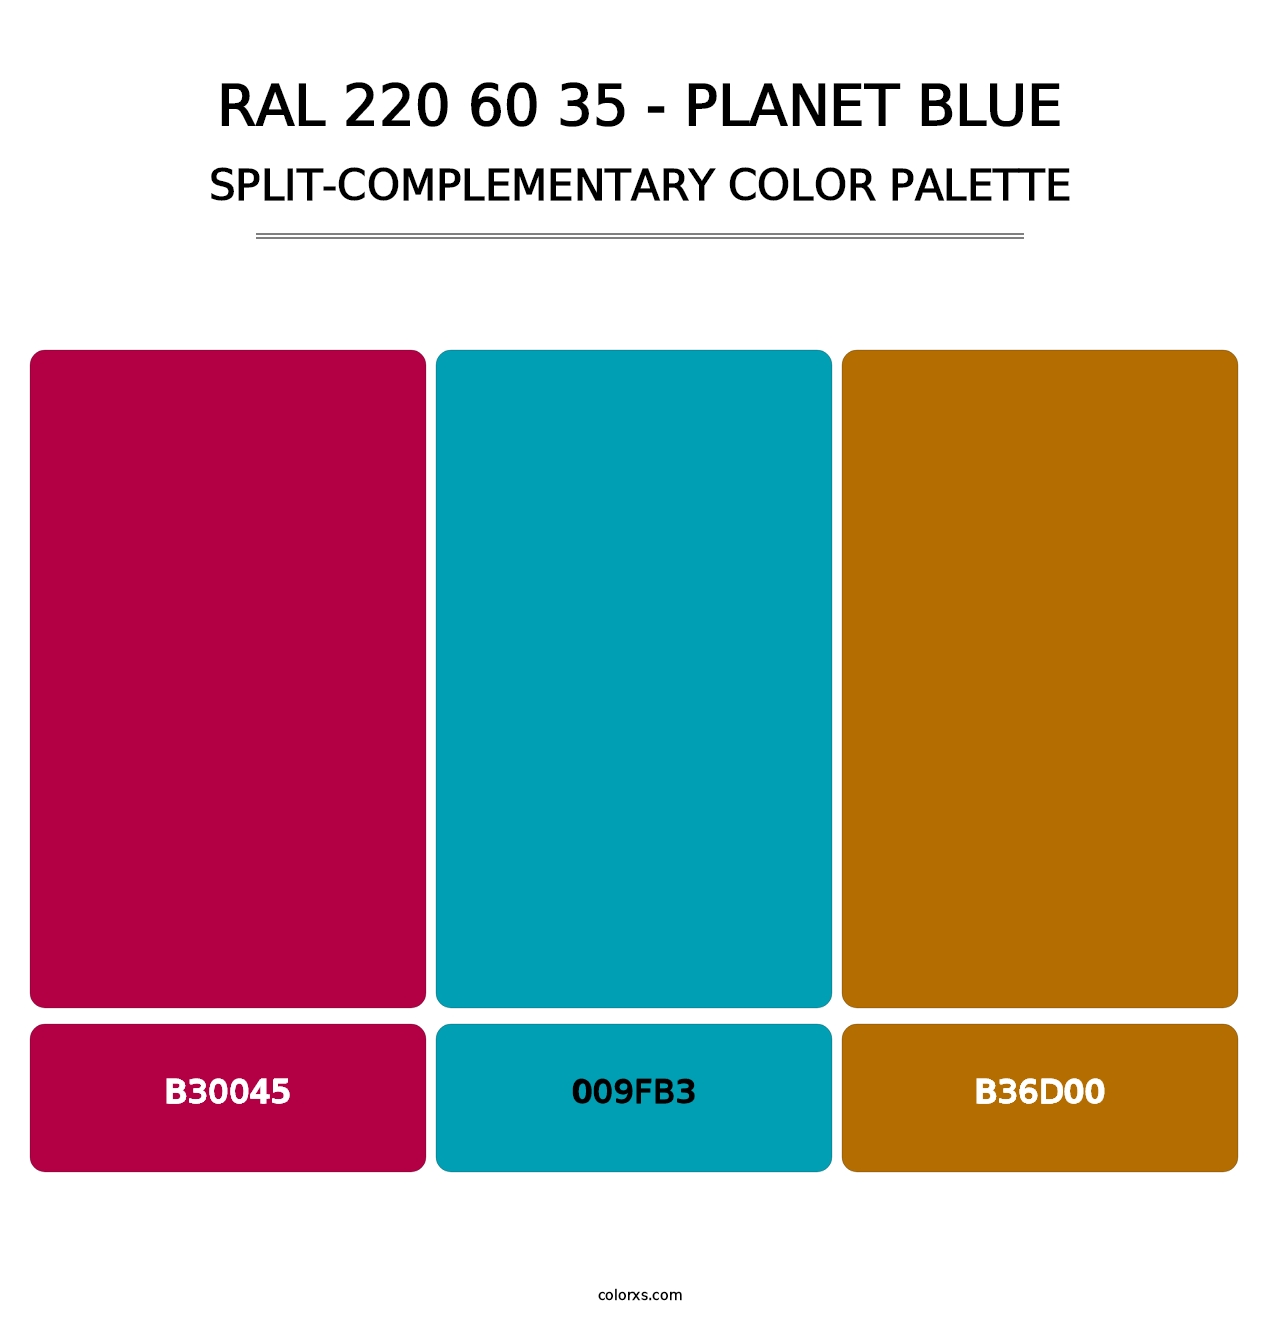 RAL 220 60 35 - Planet Blue - Split-Complementary Color Palette